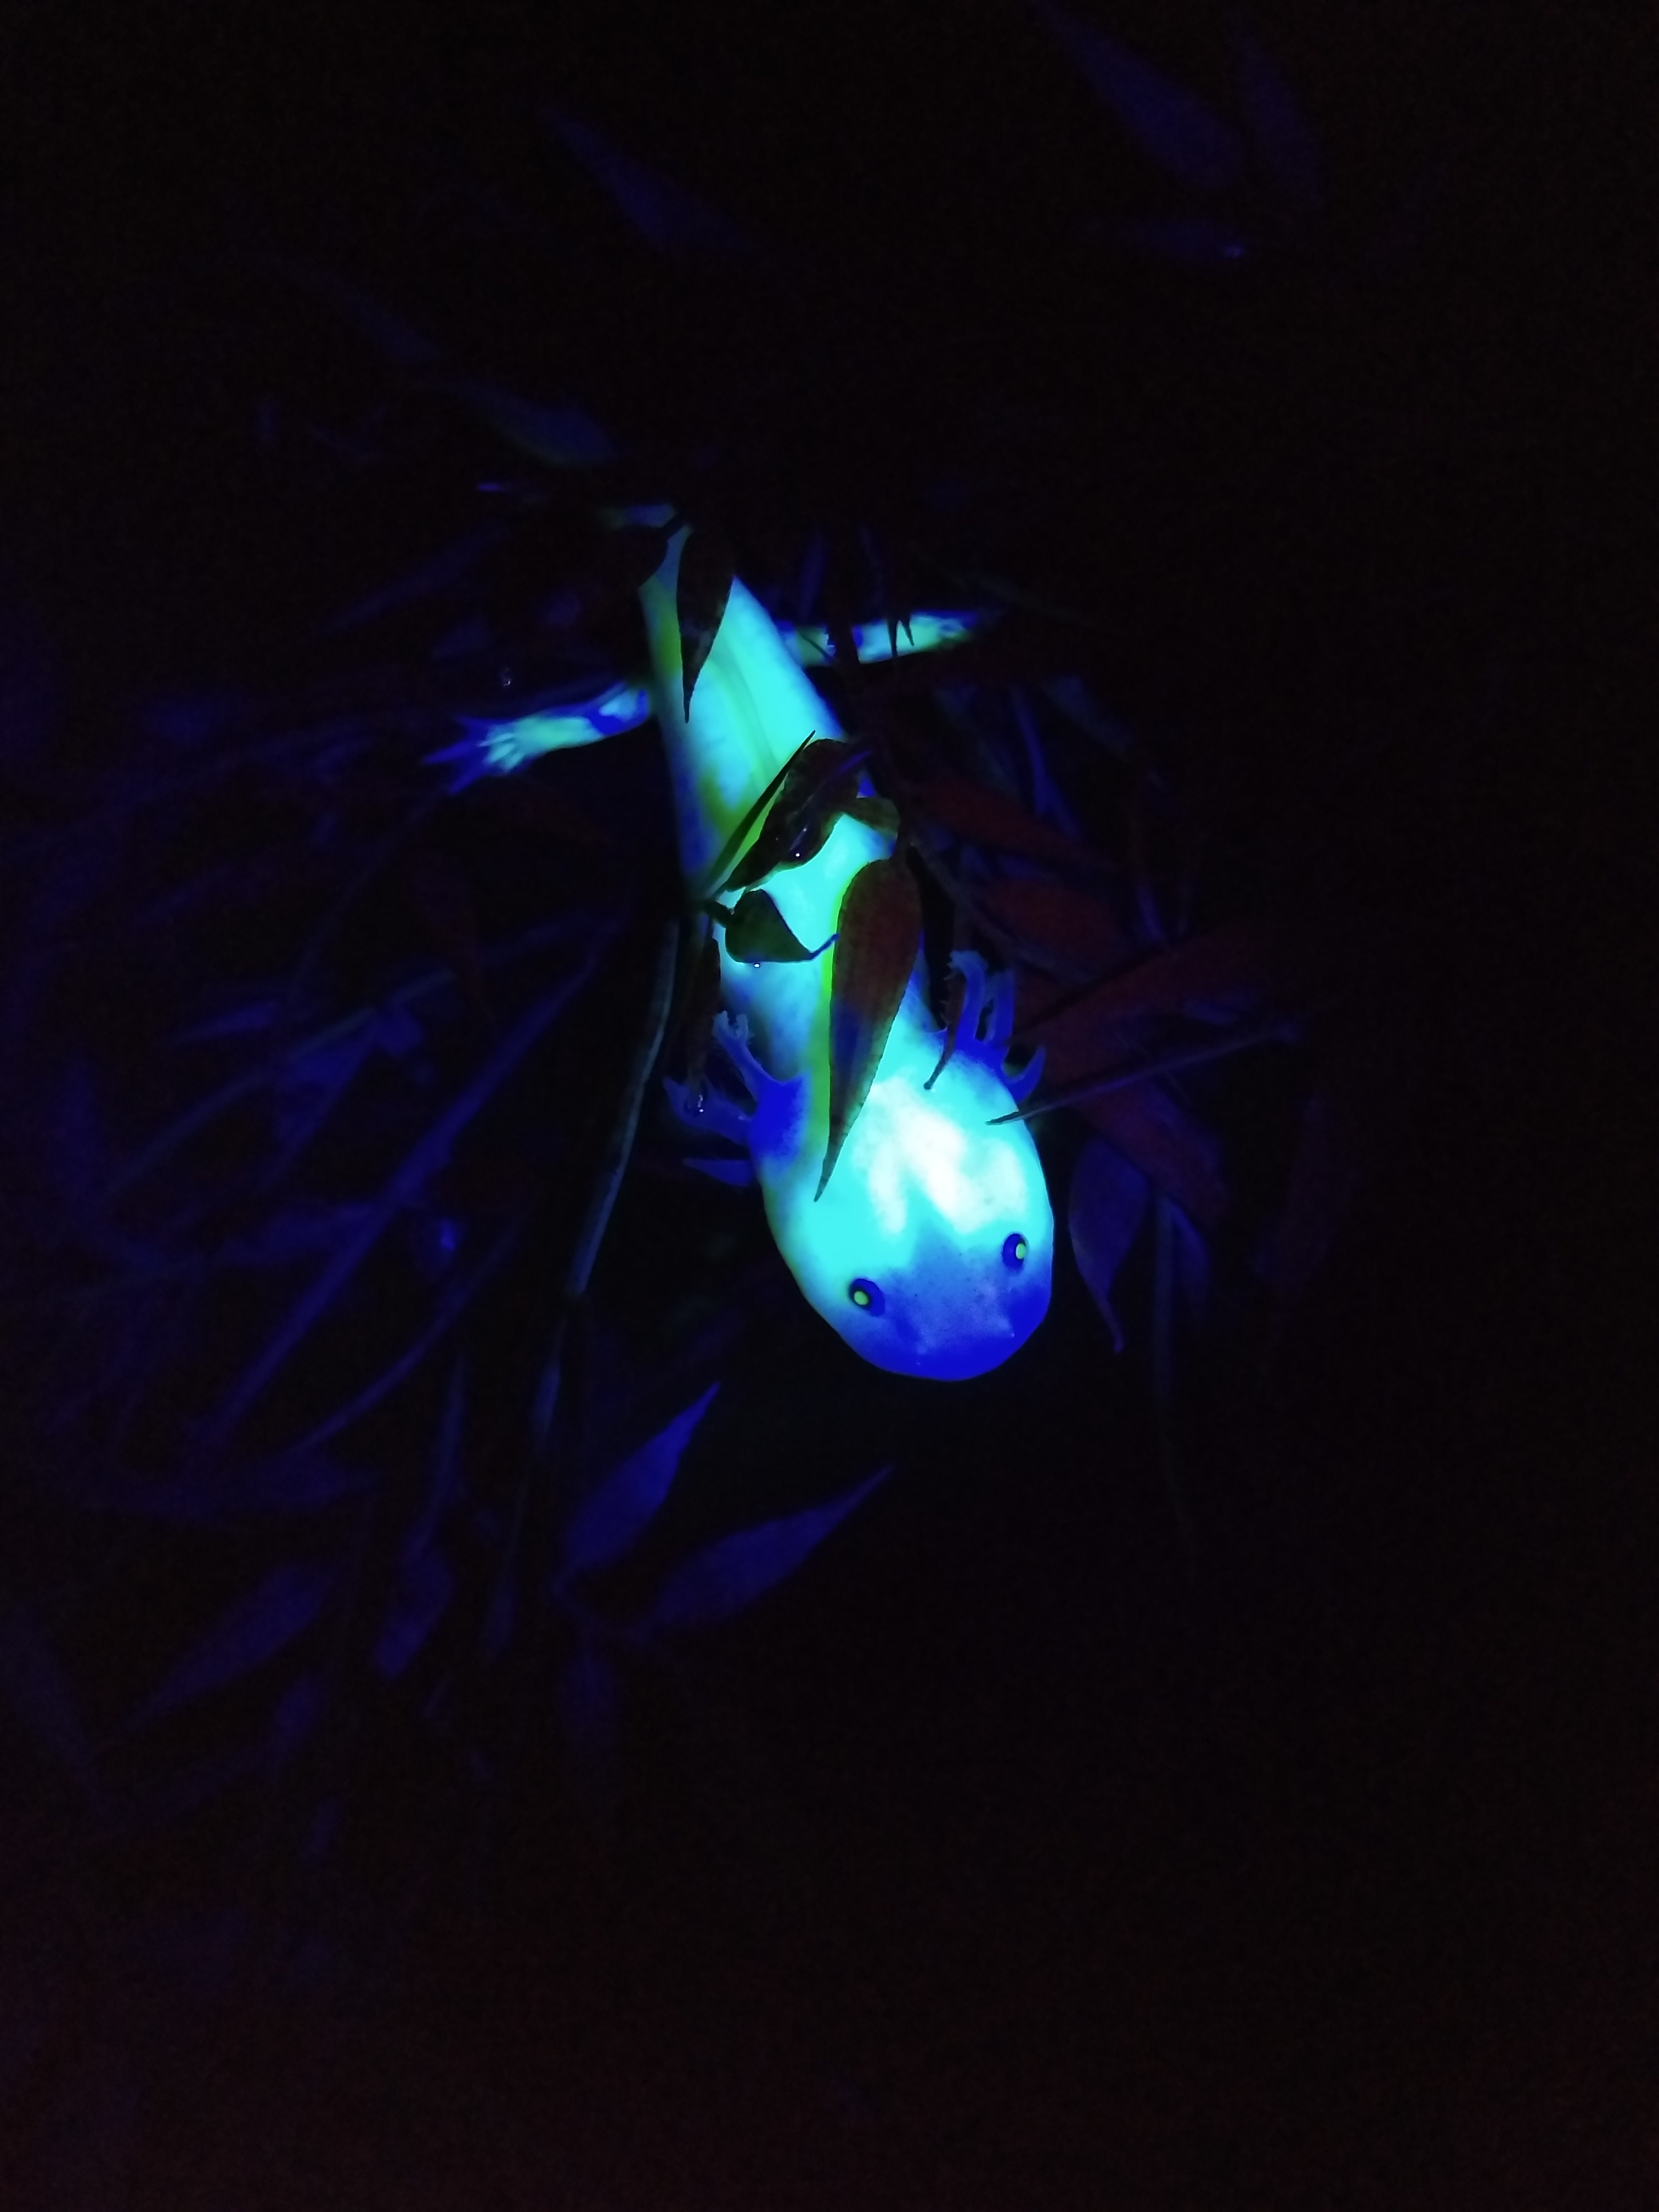 Glowing Axolotl Caudata Org Newts And Salamanders Portal